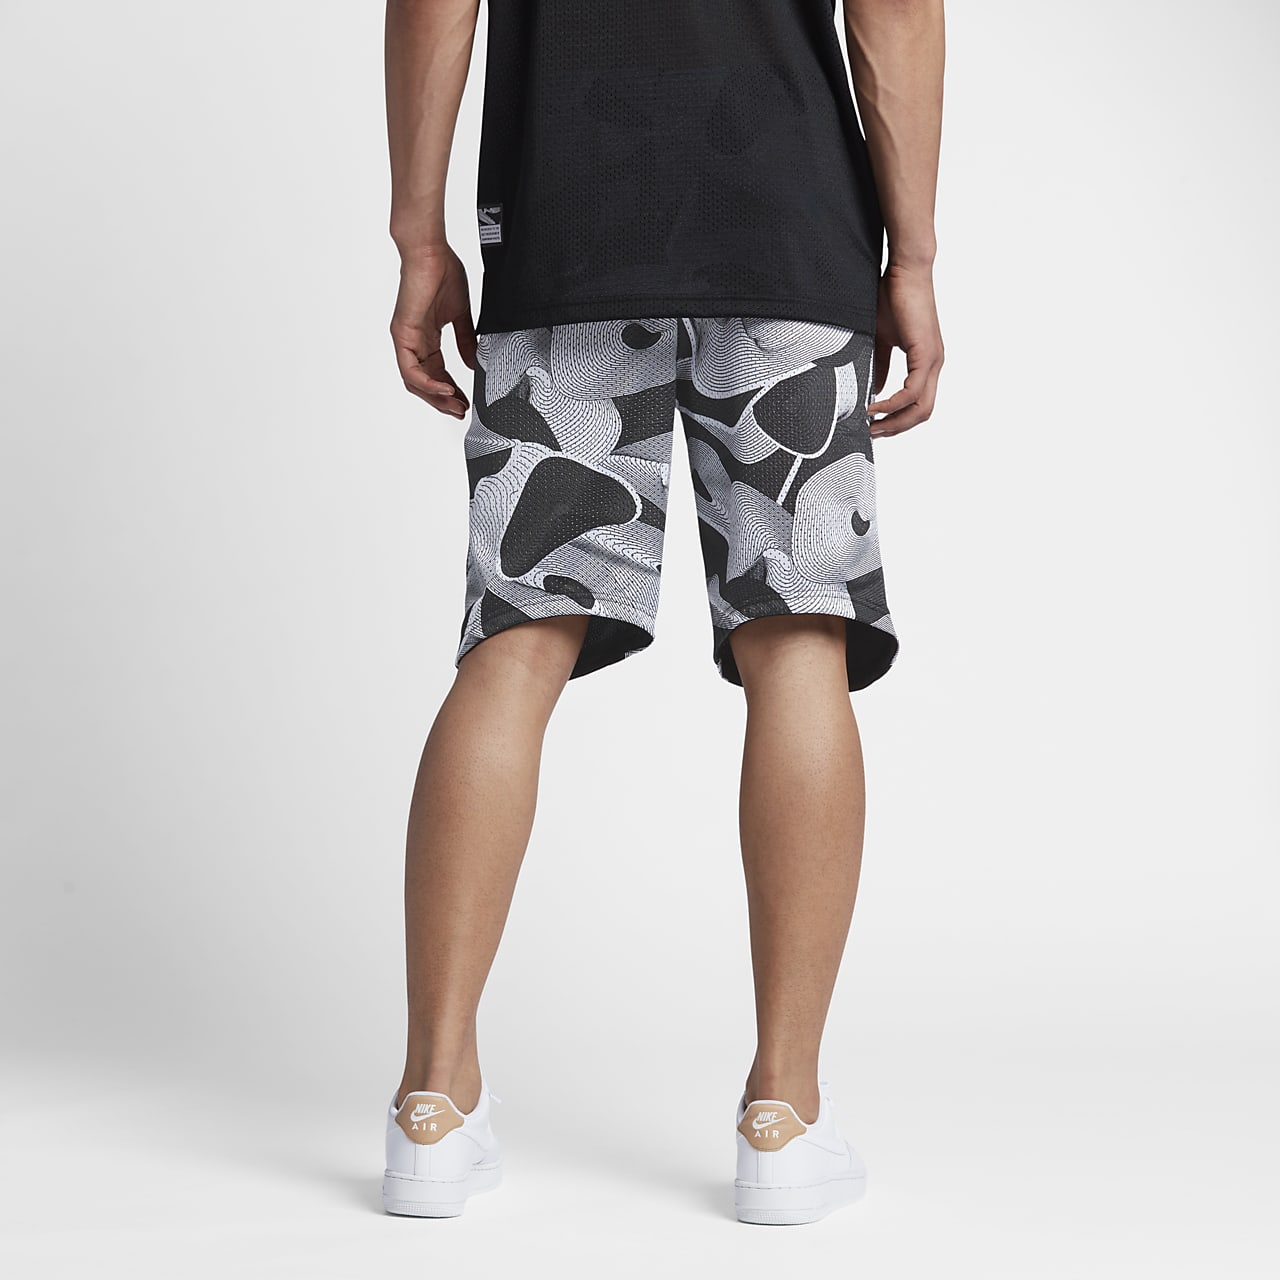 Grey Nike Shorts for Men